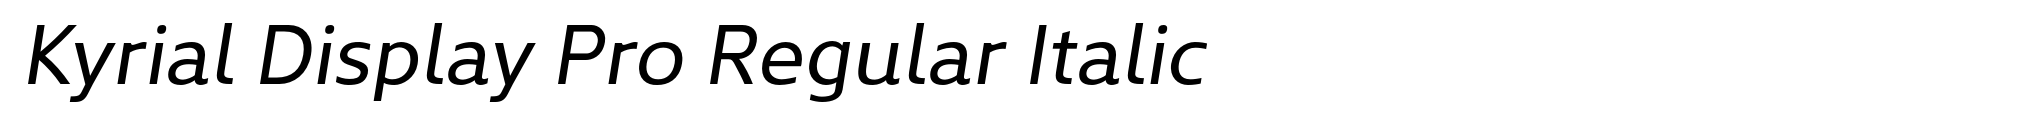 Kyrial Display Pro Regular Italic image